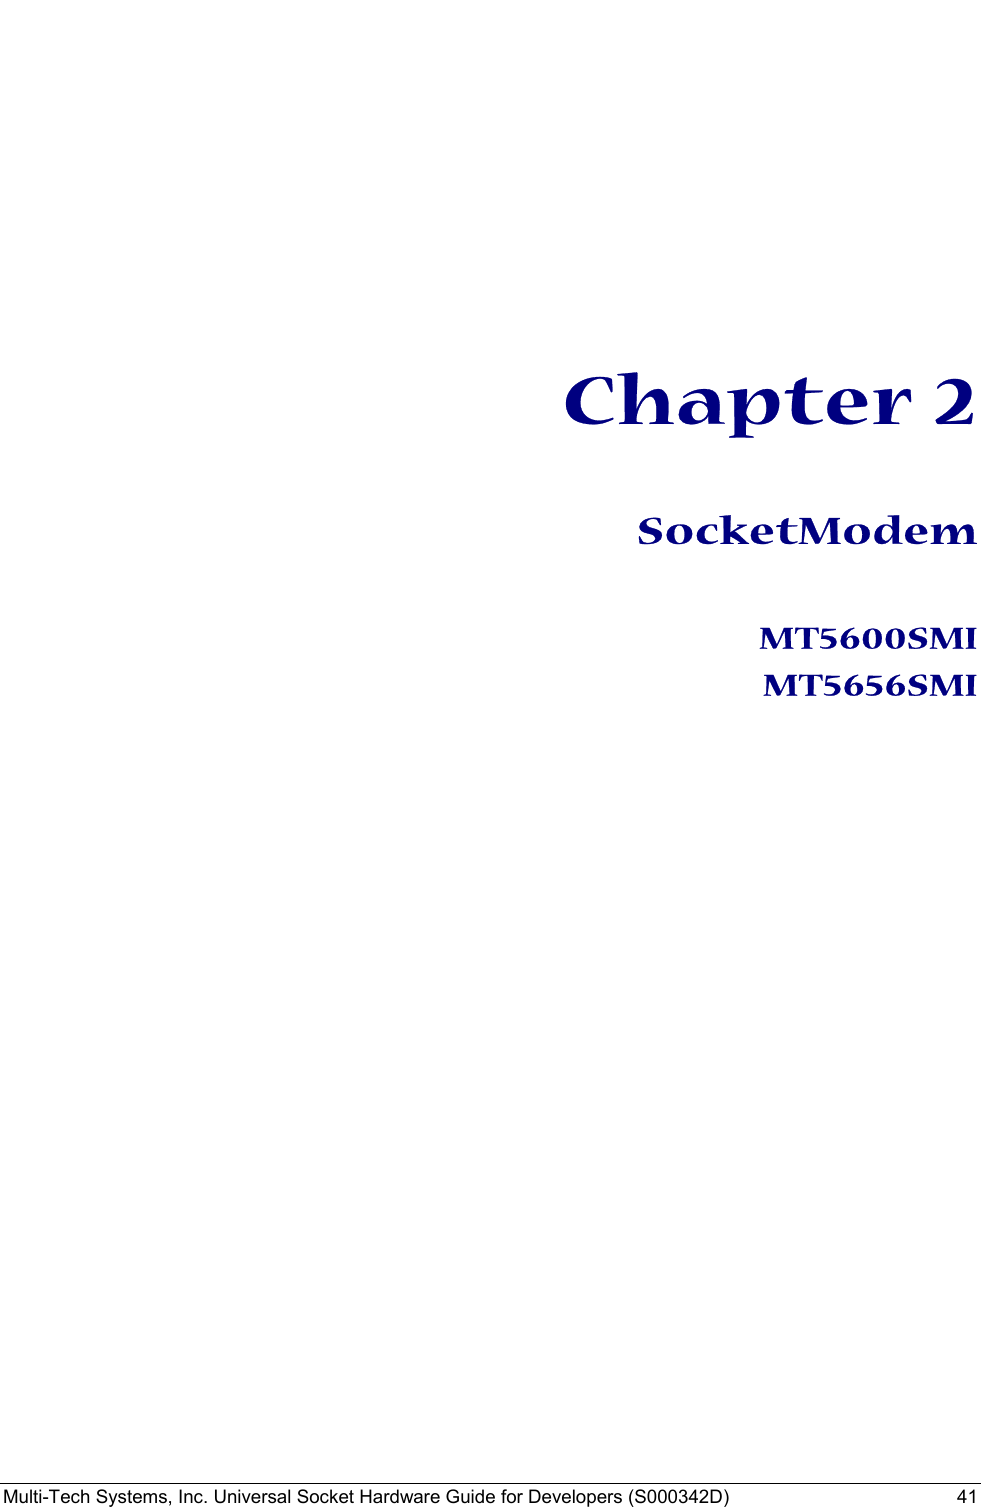  Multi-Tech Systems, Inc. Universal Socket Hardware Guide for Developers (S000342D)  41         Chapter 2  SocketModem  MT5600SMI  MT5656SMI    